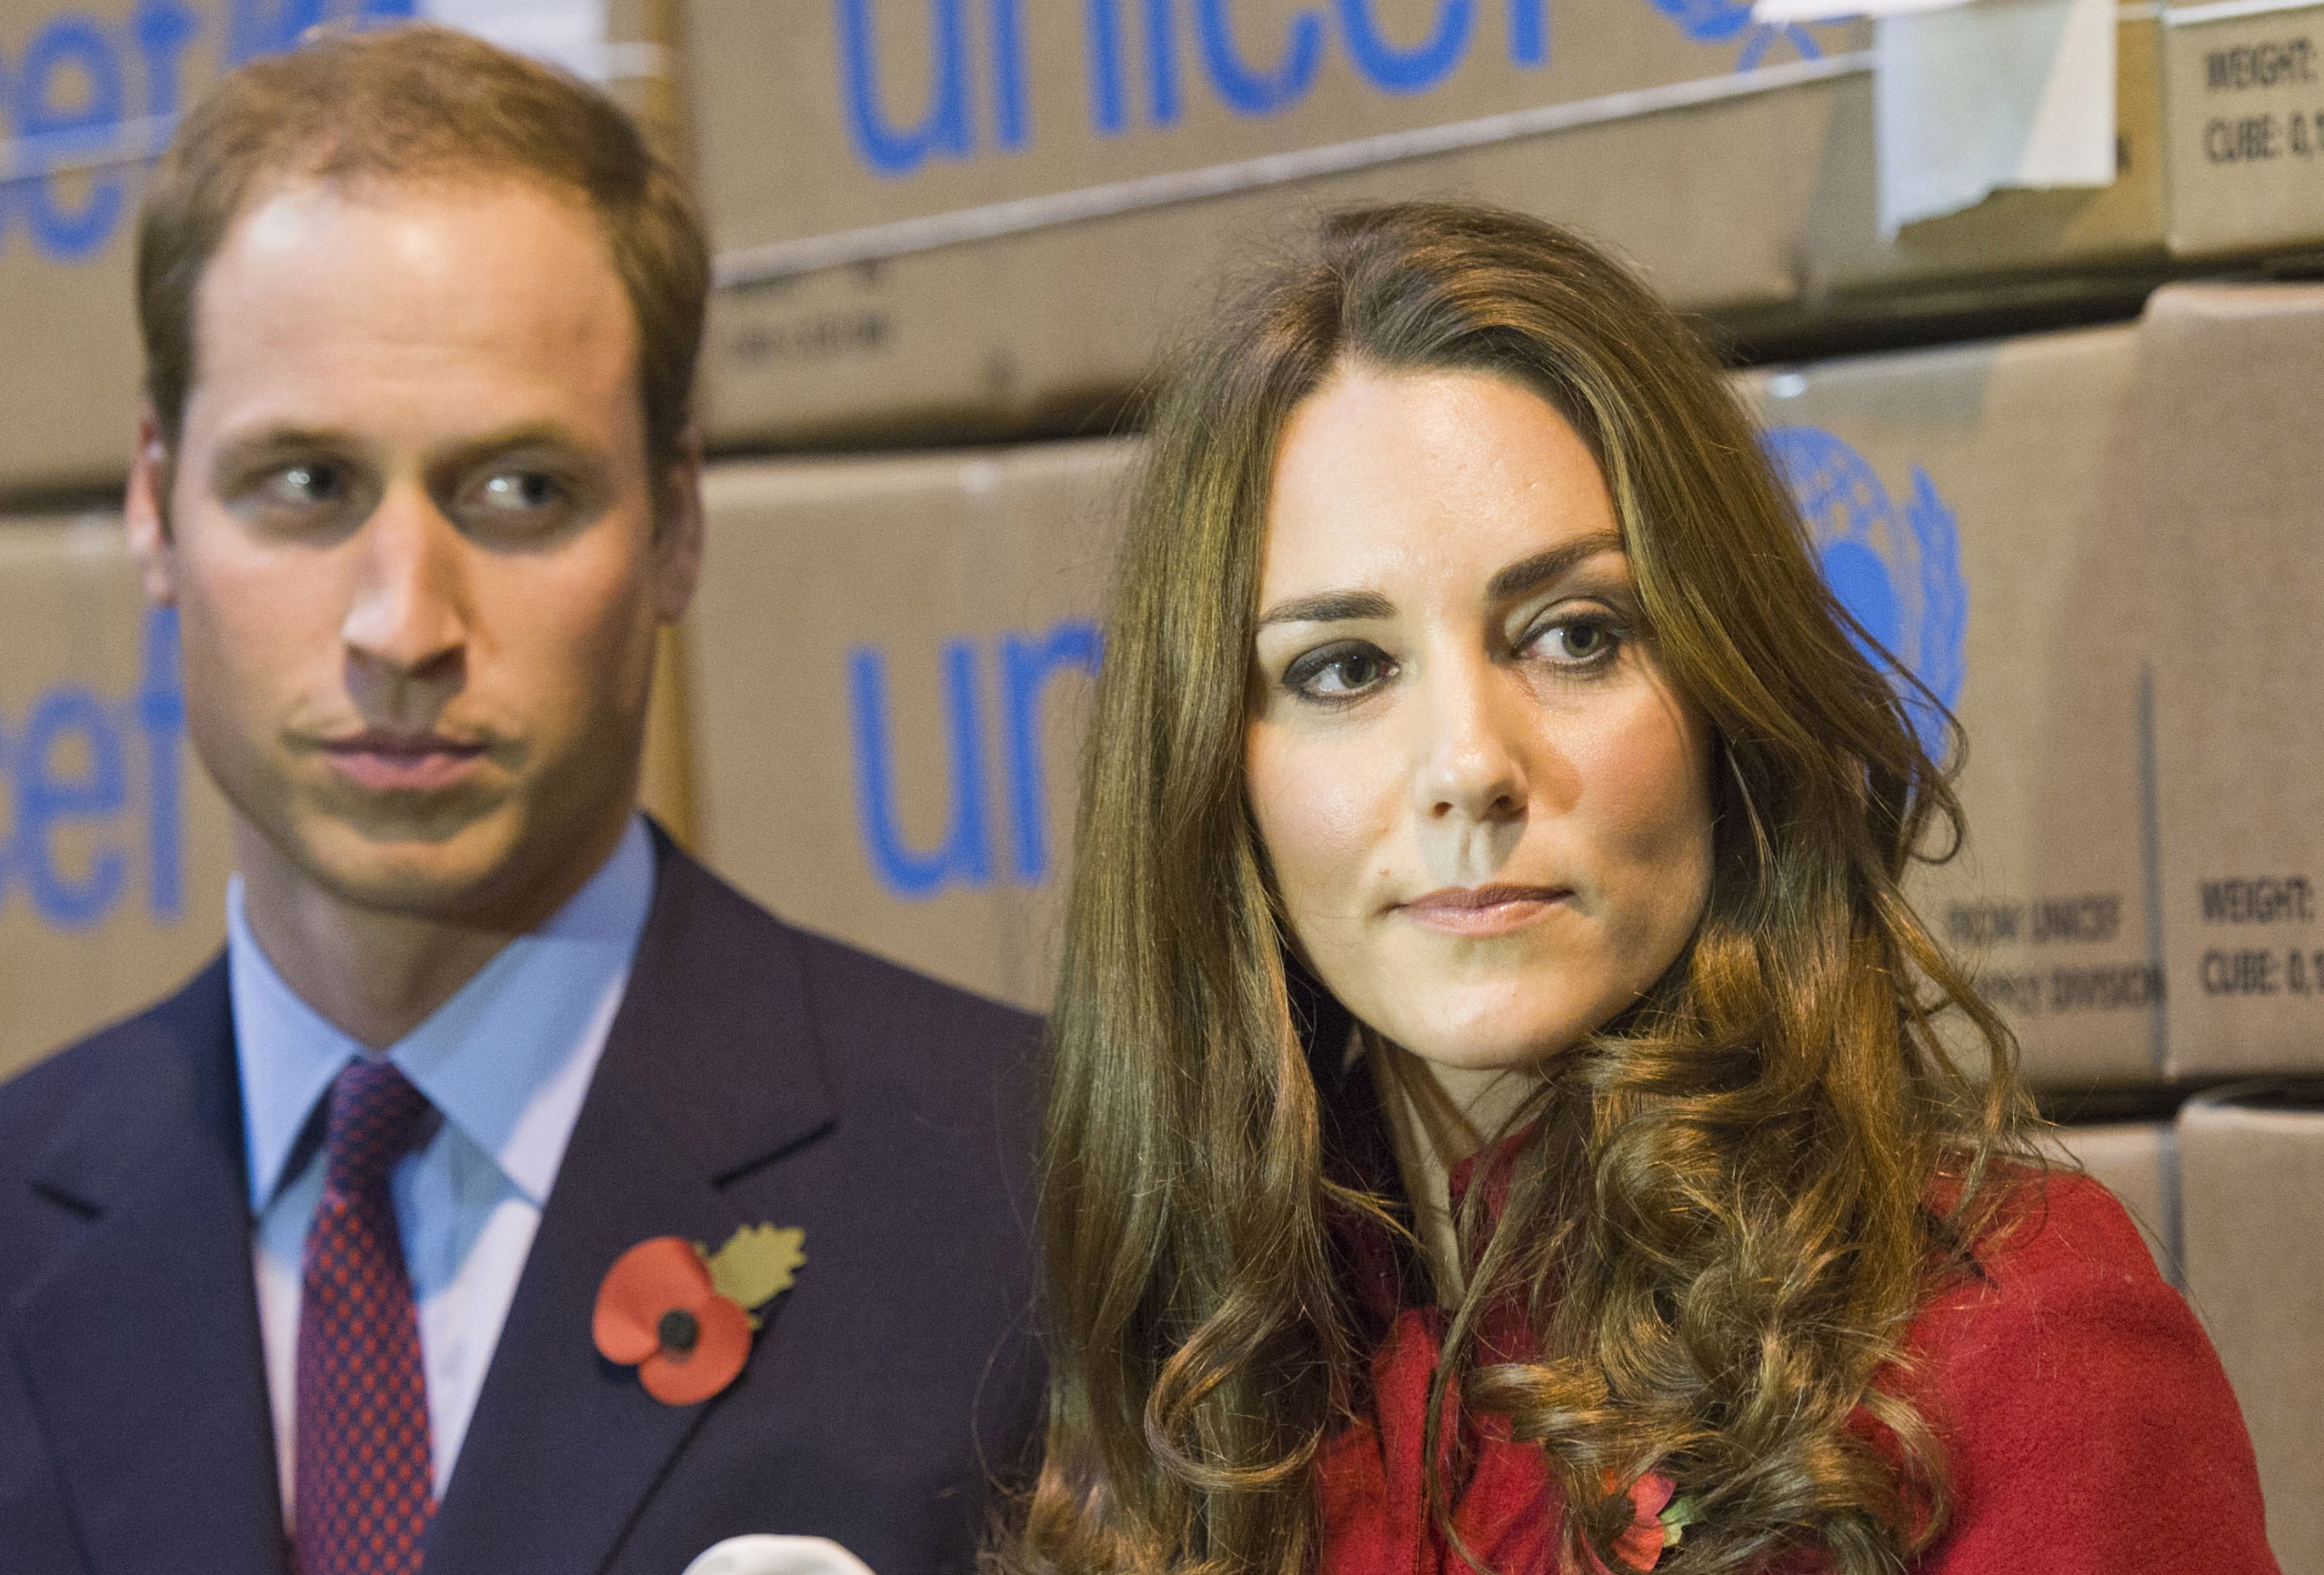 Duchess] YEAR 1 : UNICEF Supply Centre Visit in Copenhagen Outfit